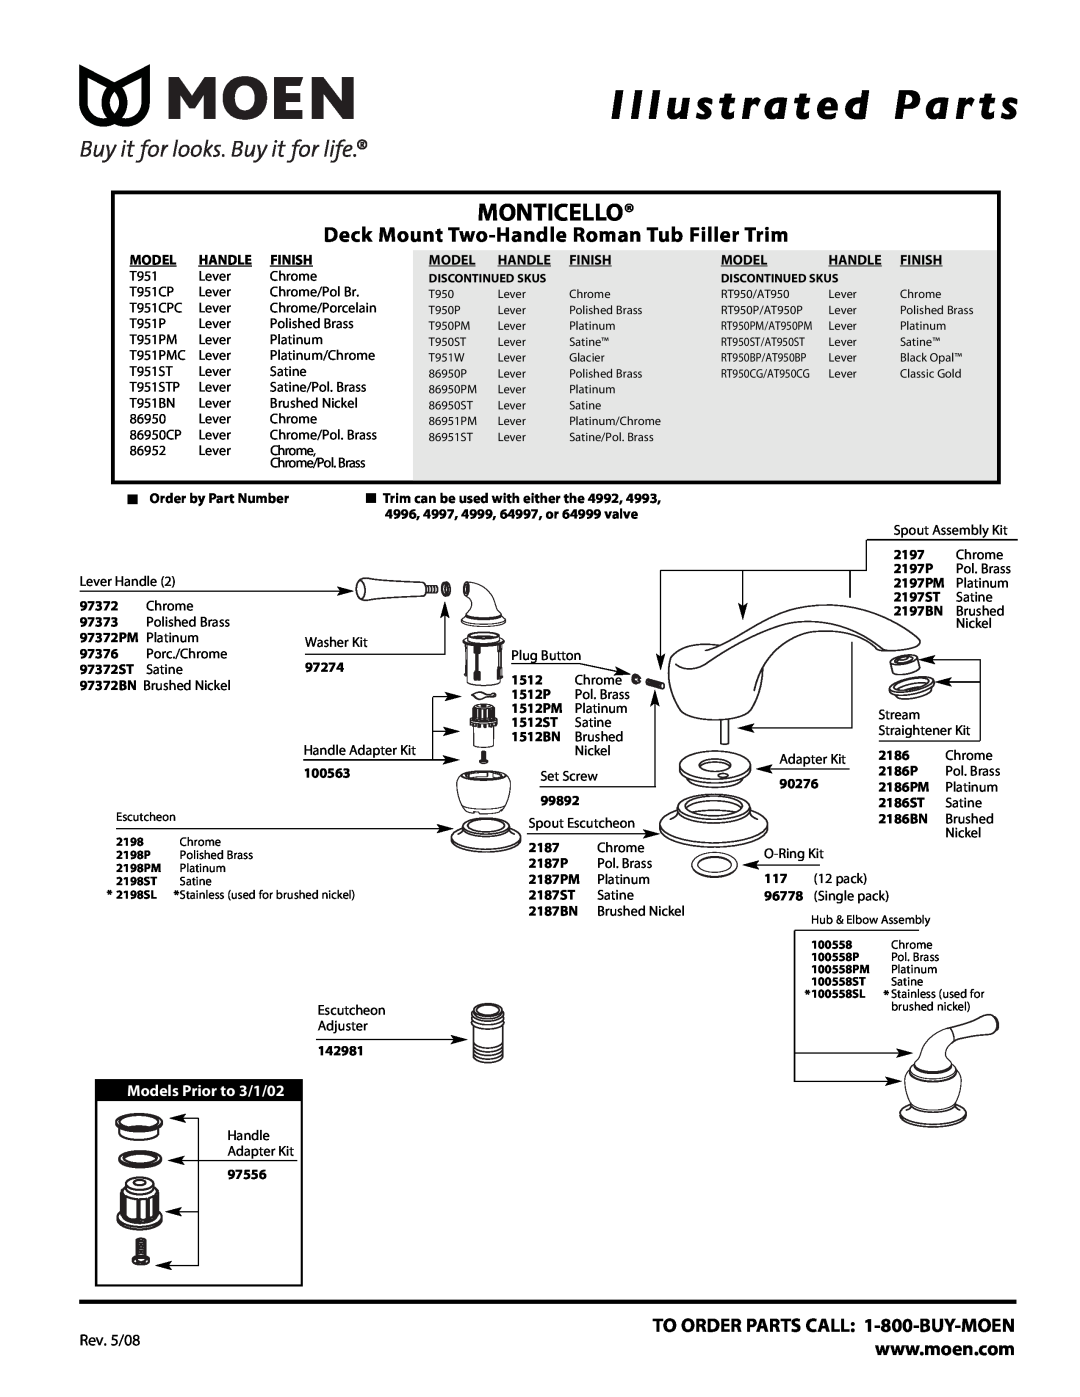 Moen RT950BP/AT950BP, T950P manual Illustrated Par ts, Monticello, Deck Mount Two-Handle Roman Tub Filler Trim, Rev. 5/08 